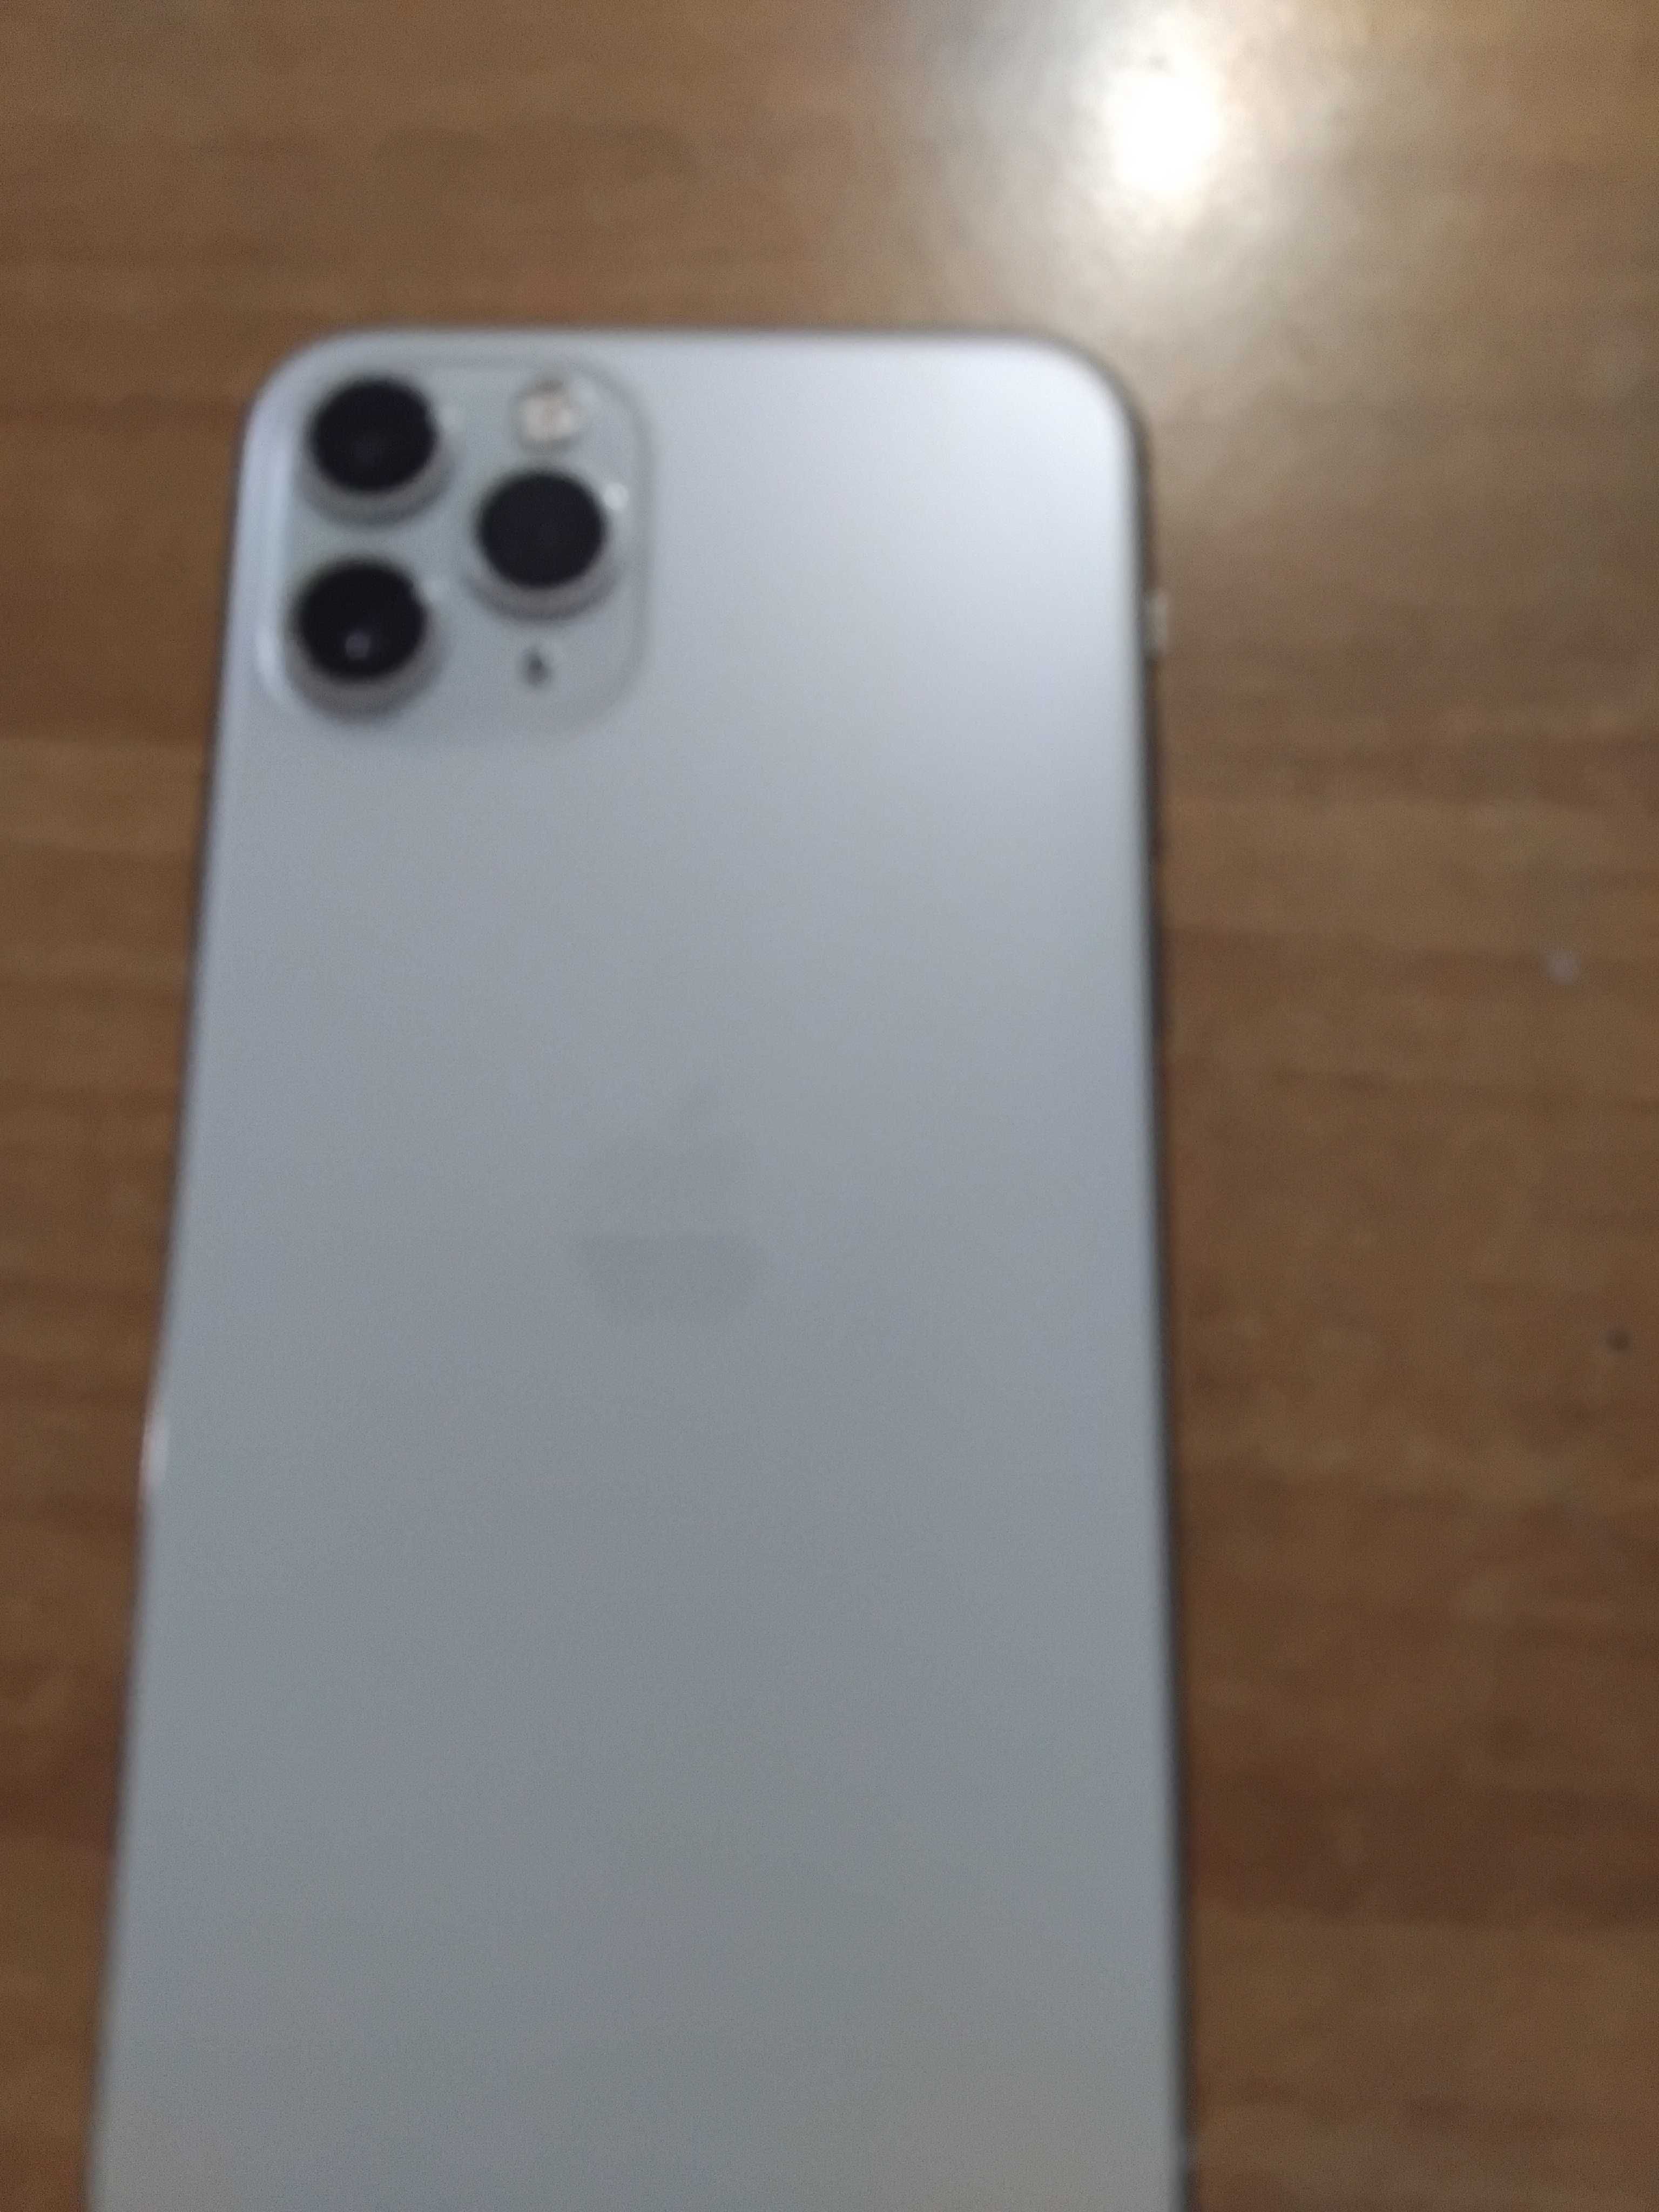 Apple iphone 11 pro